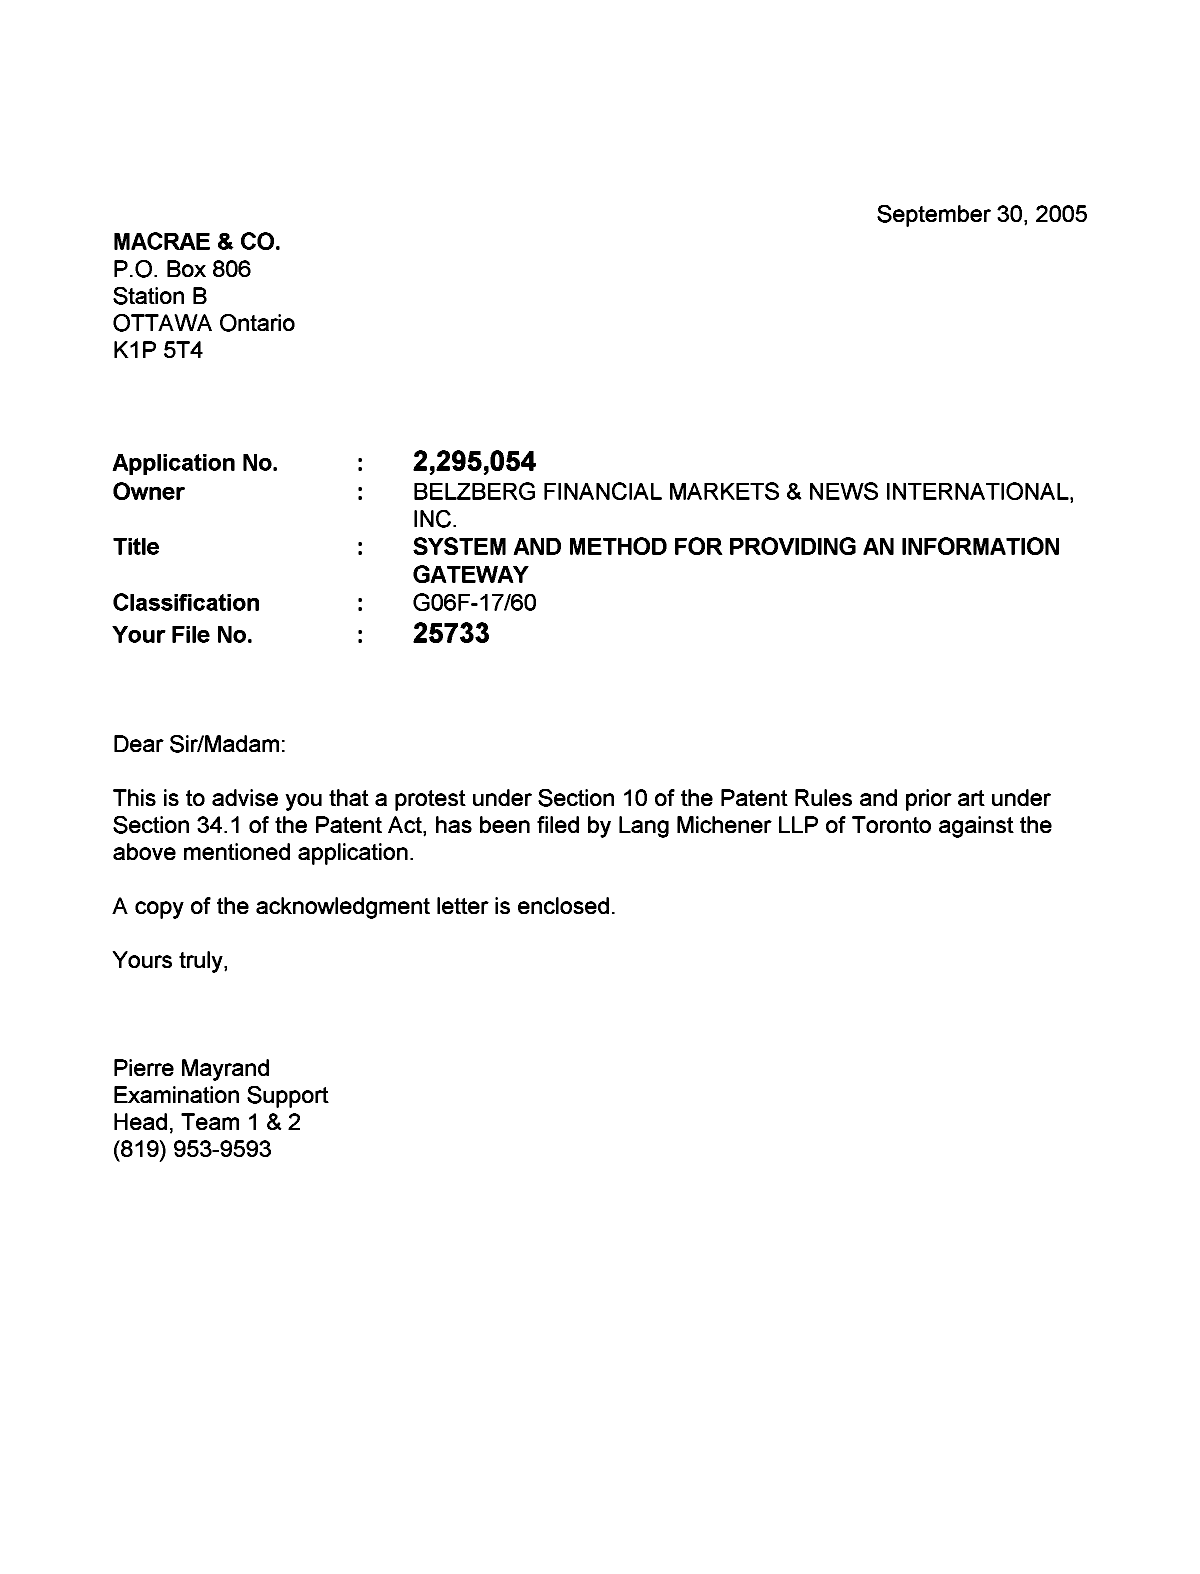 Canadian Patent Document 2295054. Prosecution-Amendment 20050930. Image 1 of 2